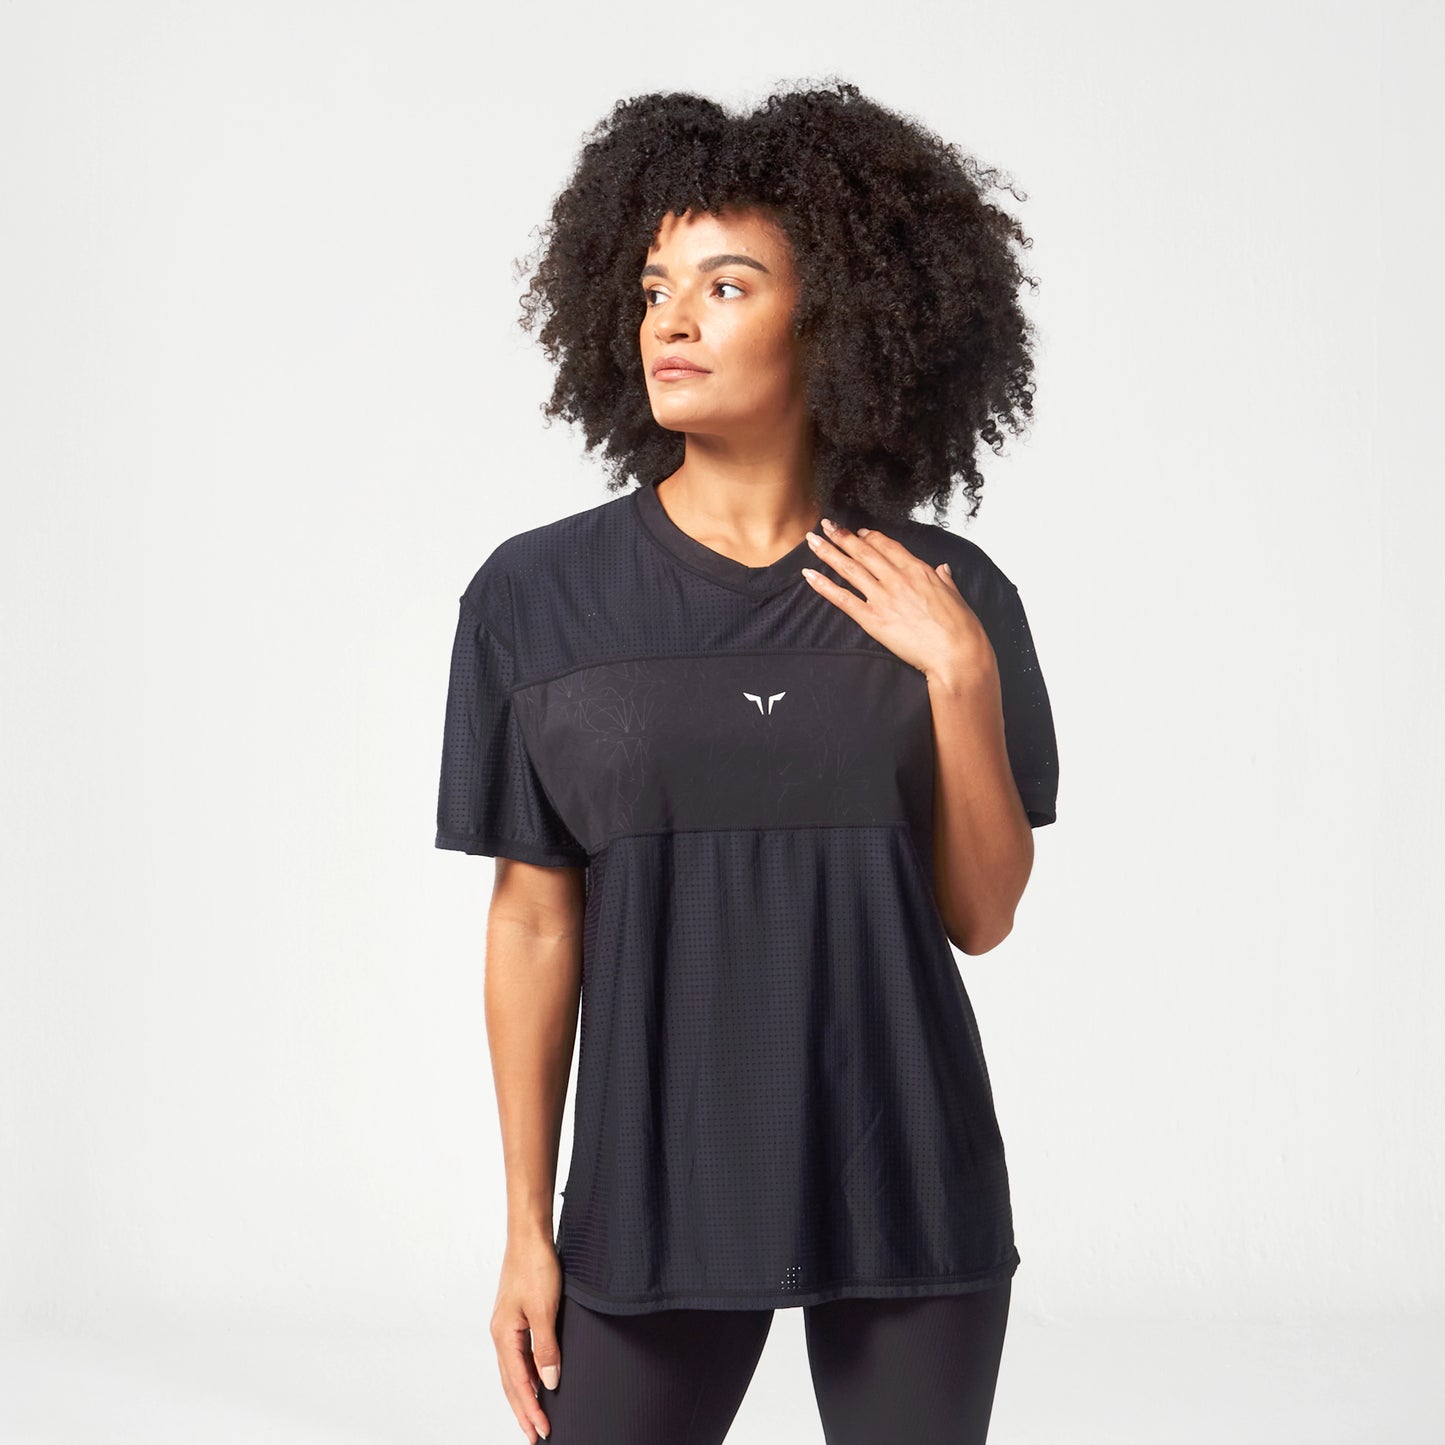 AE | Mesh Reversible Tee - Black | Workout Shirts Women | SQUATWOLF